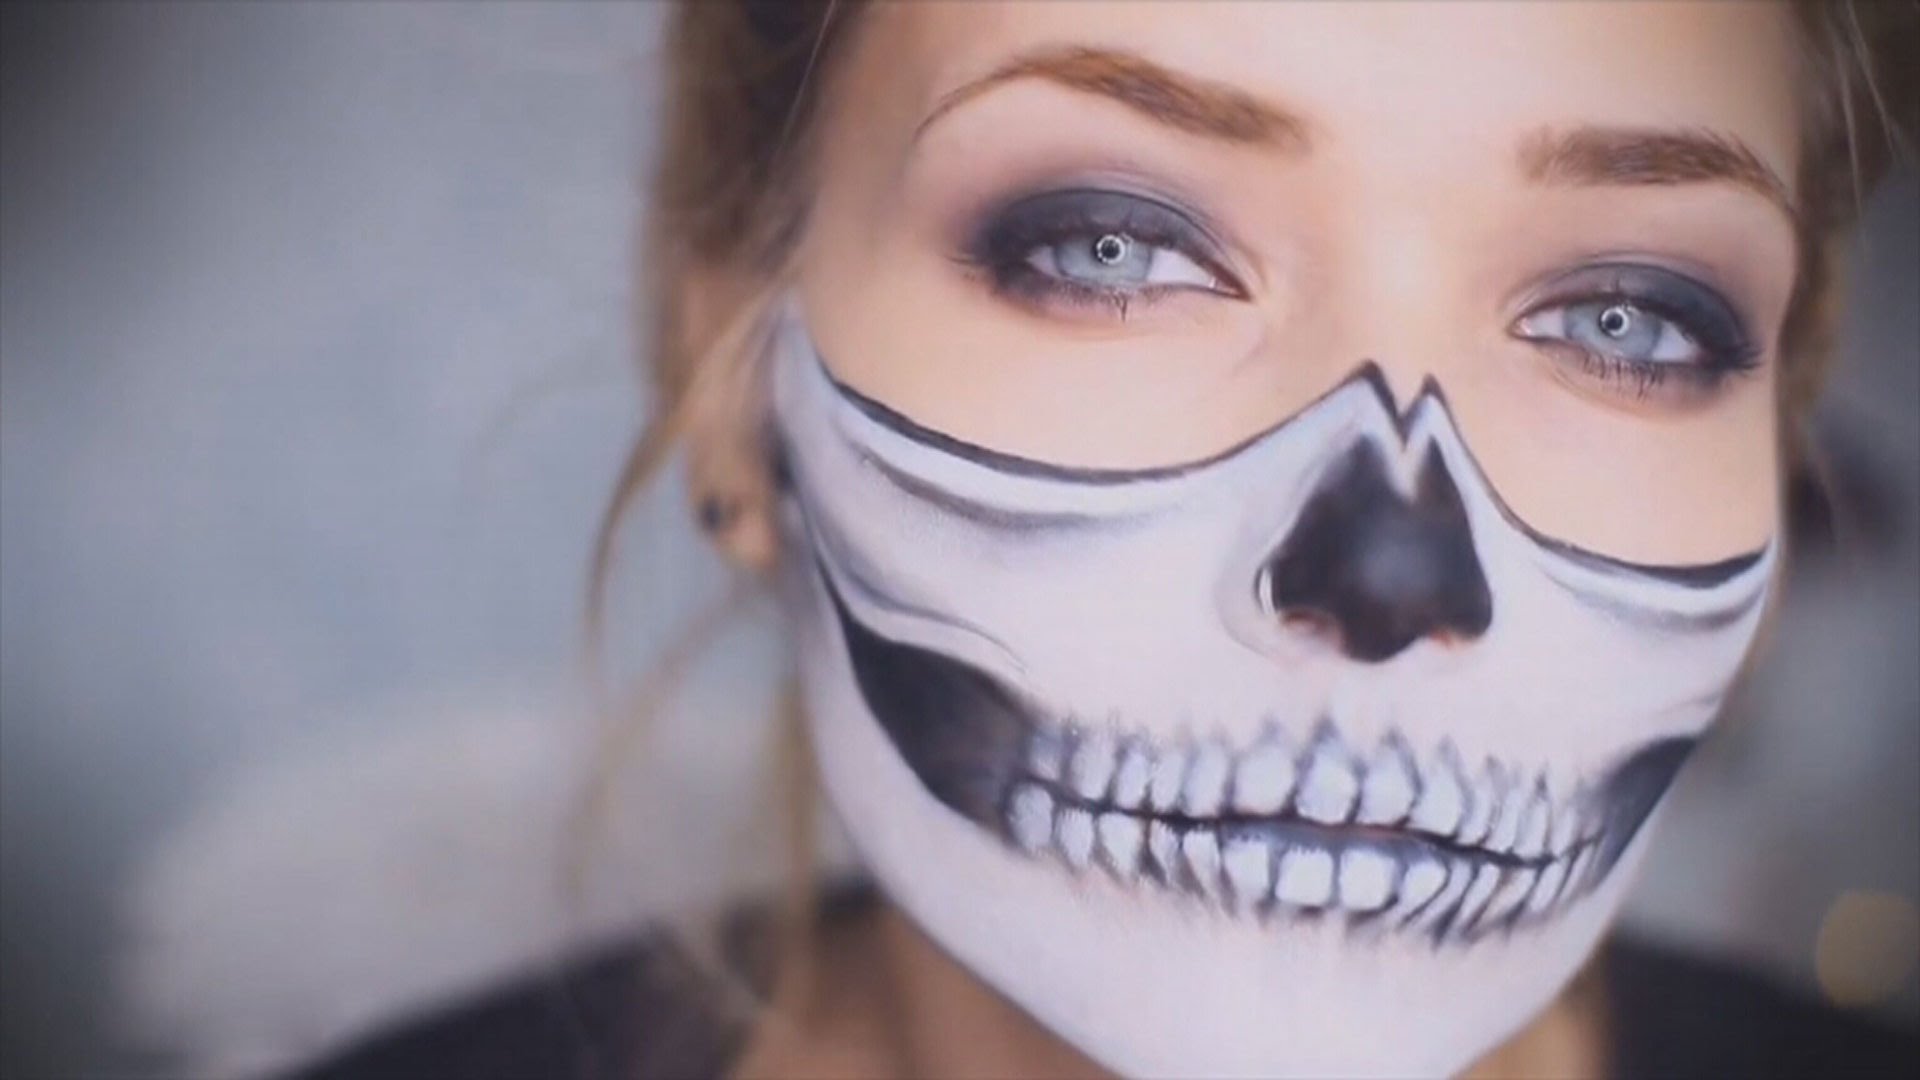 Идеи зомби-макияжа для праздника Хэллоуин